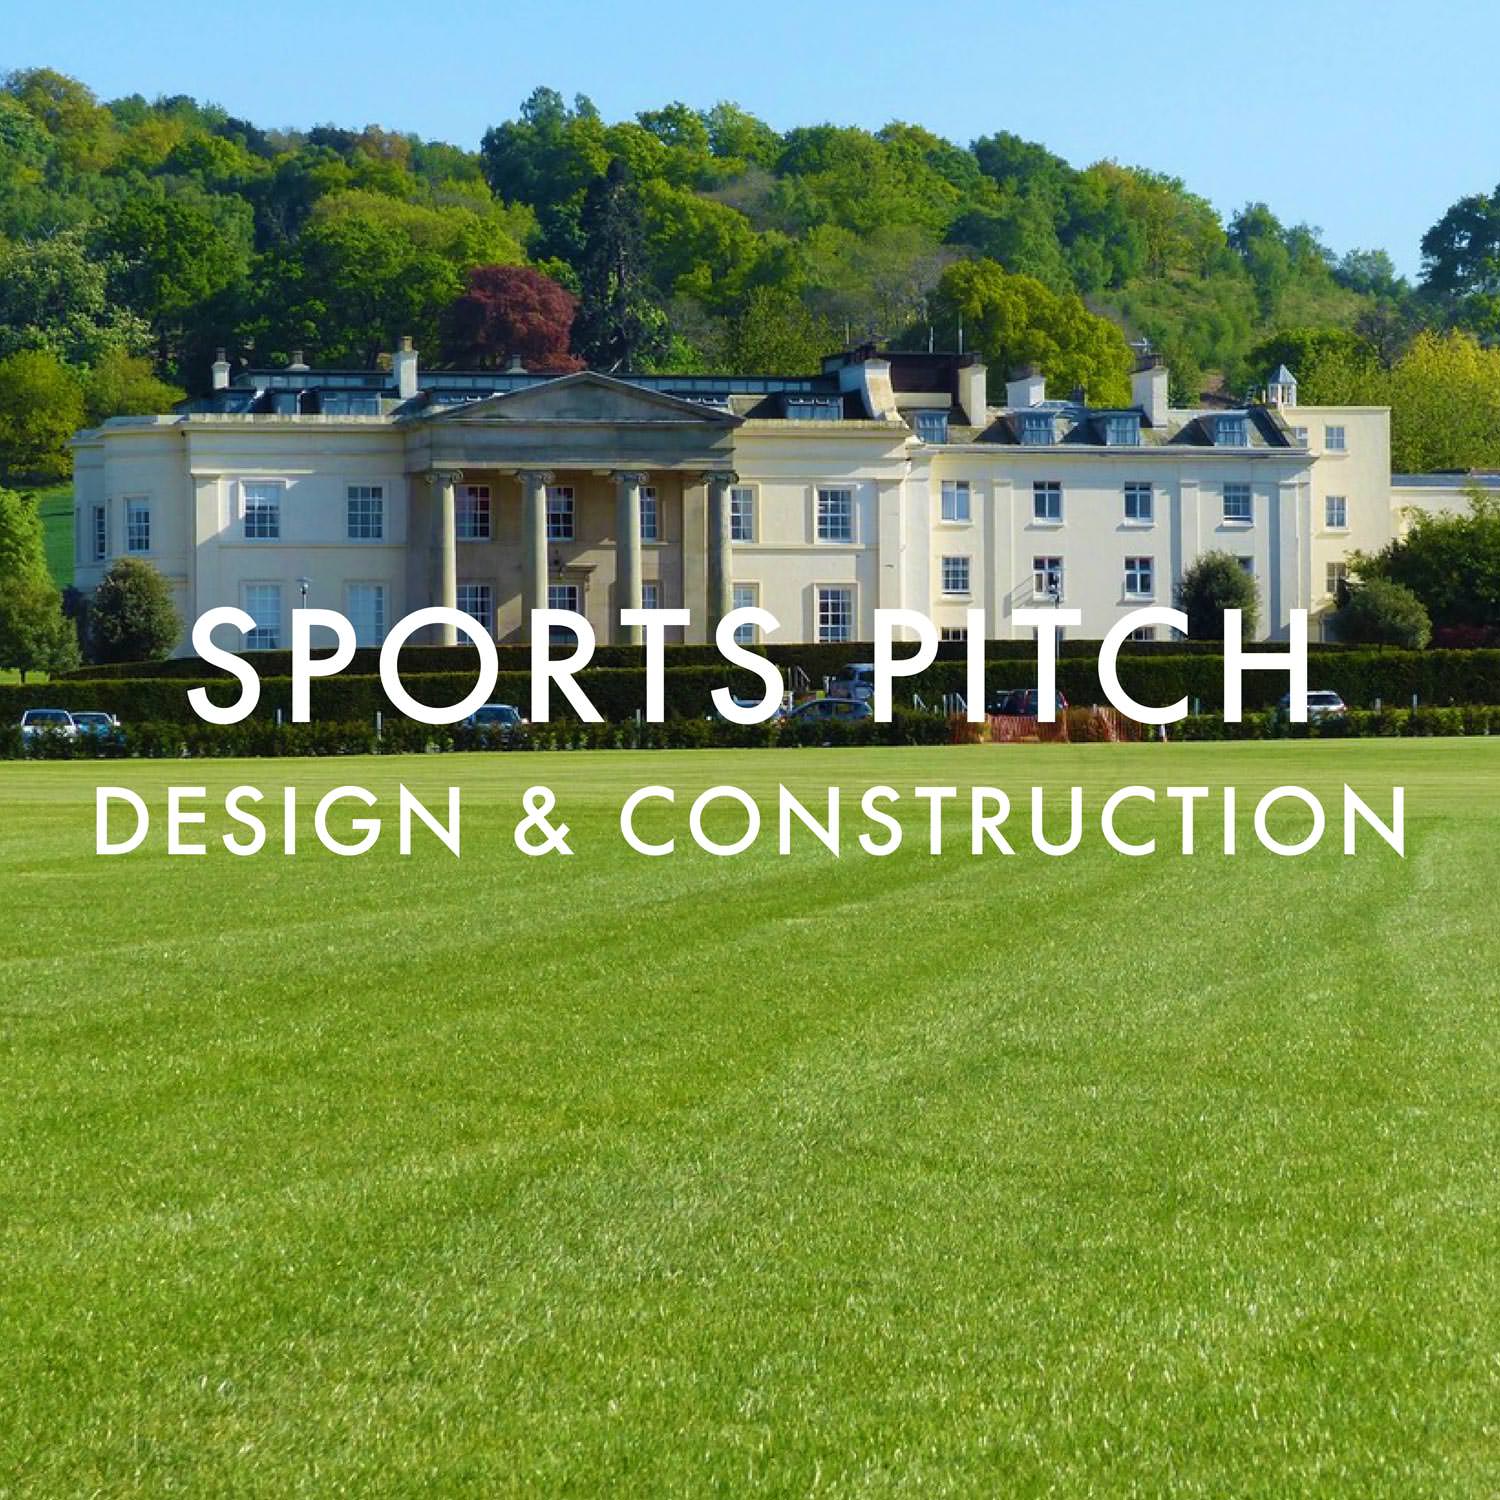 Sports Pitch Design & Construction